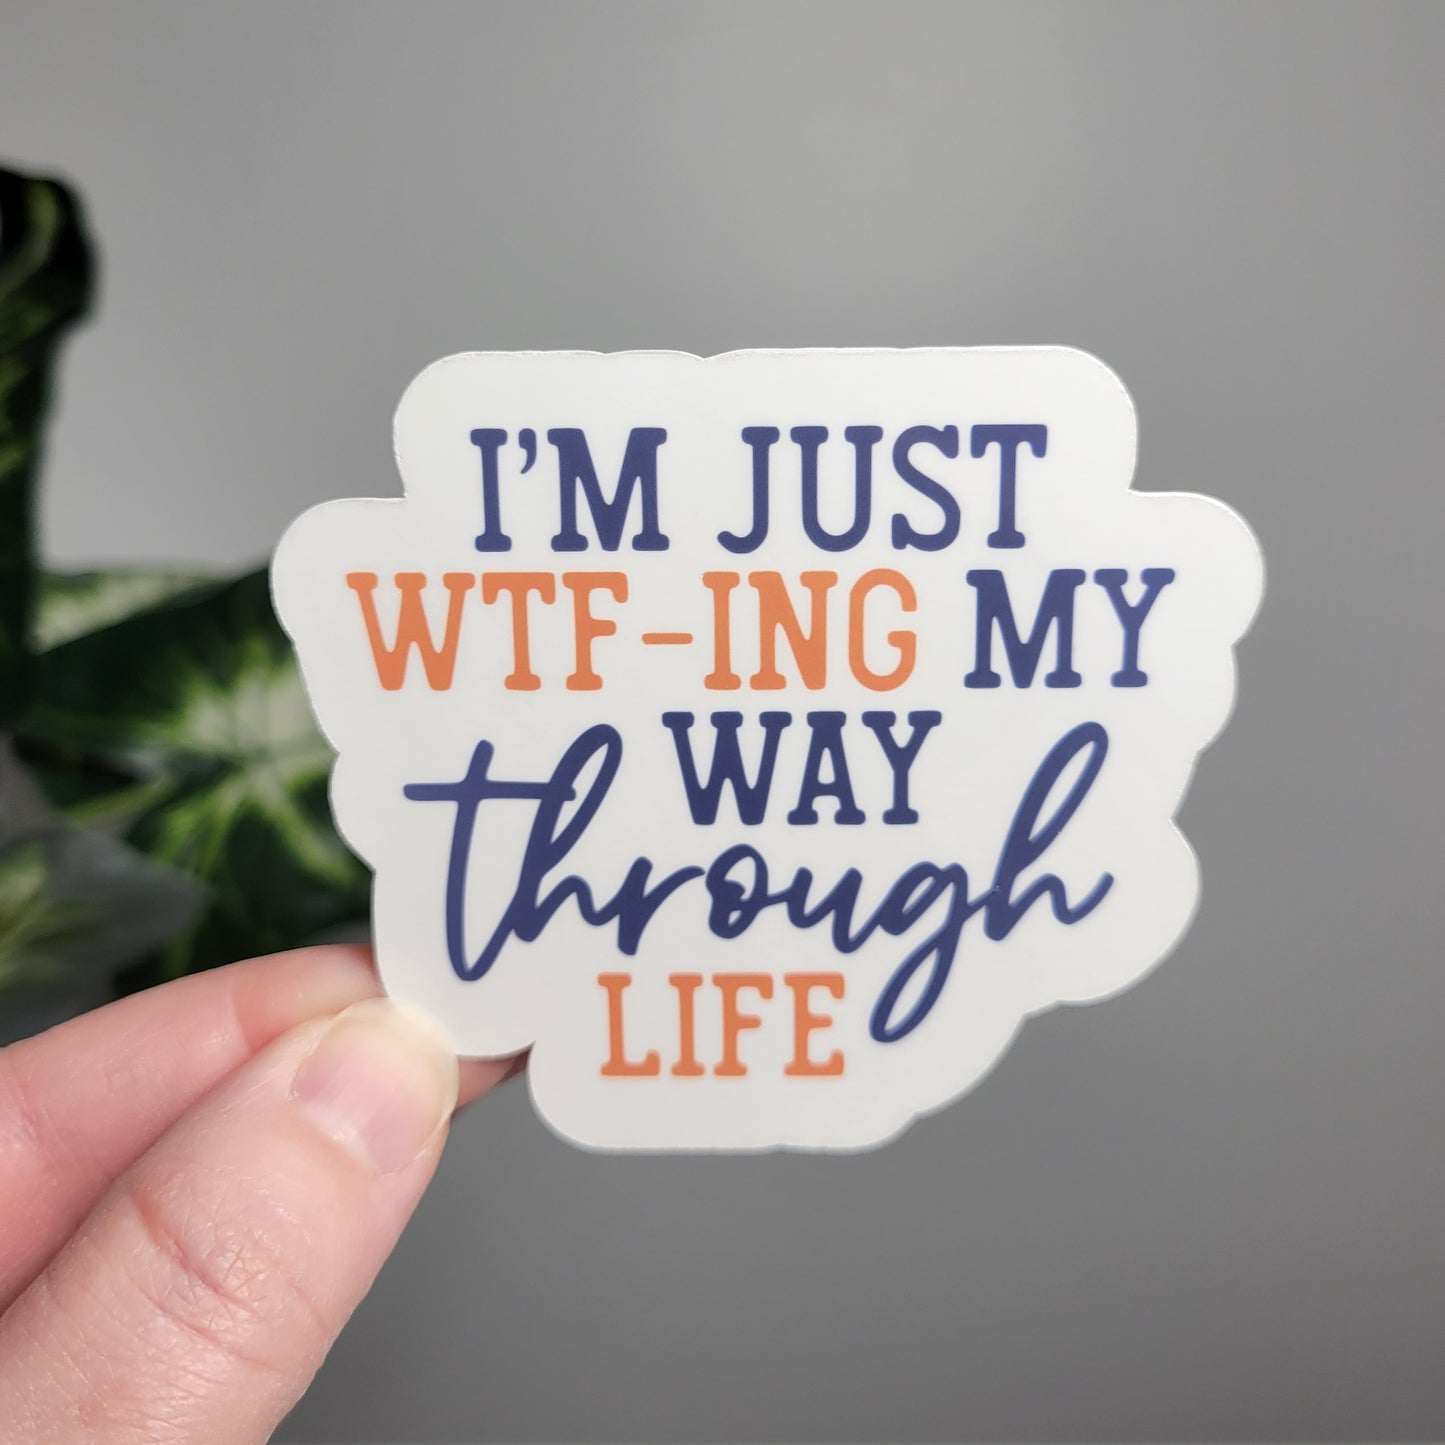 I'm Just WTFing my Way Through Life Sticker